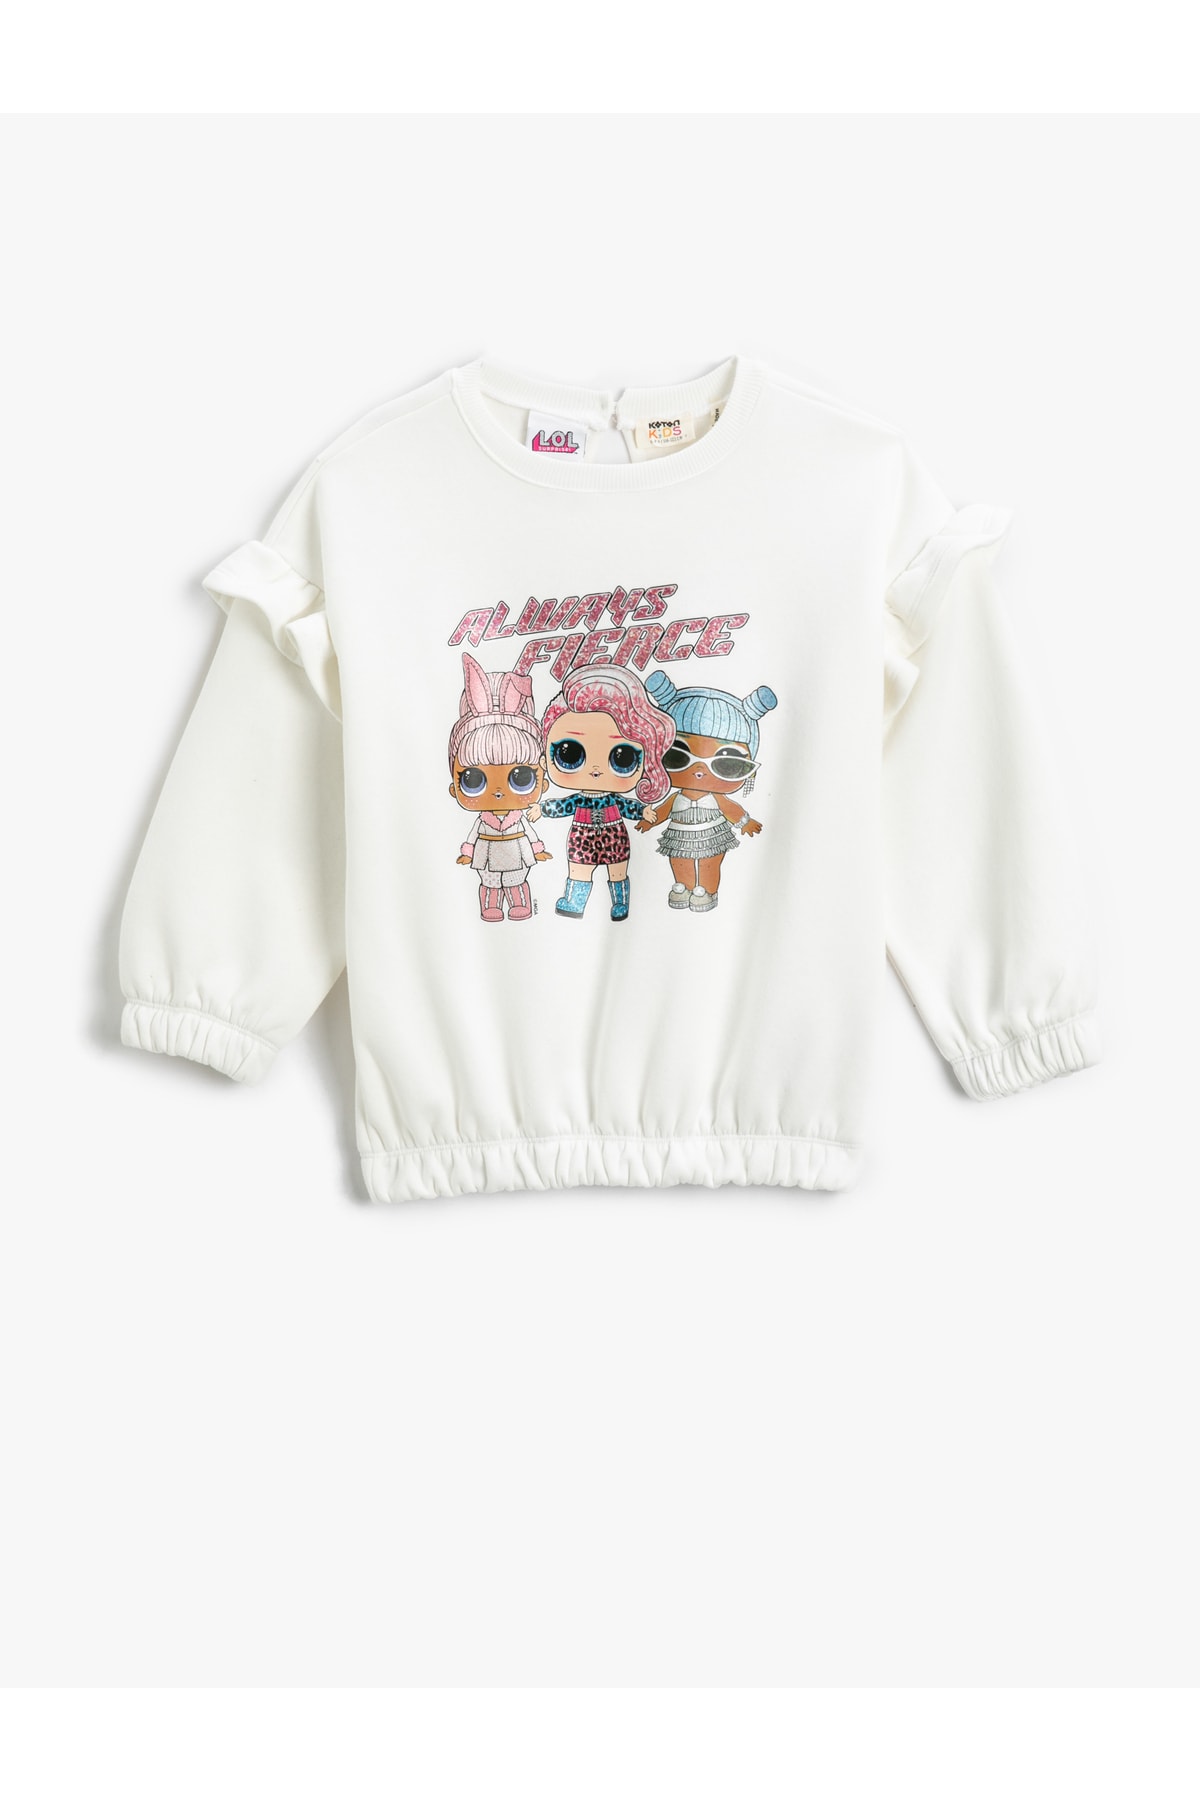 Koton Lol Surprise Printed Sweatshirt Licensed Ruffle Detail